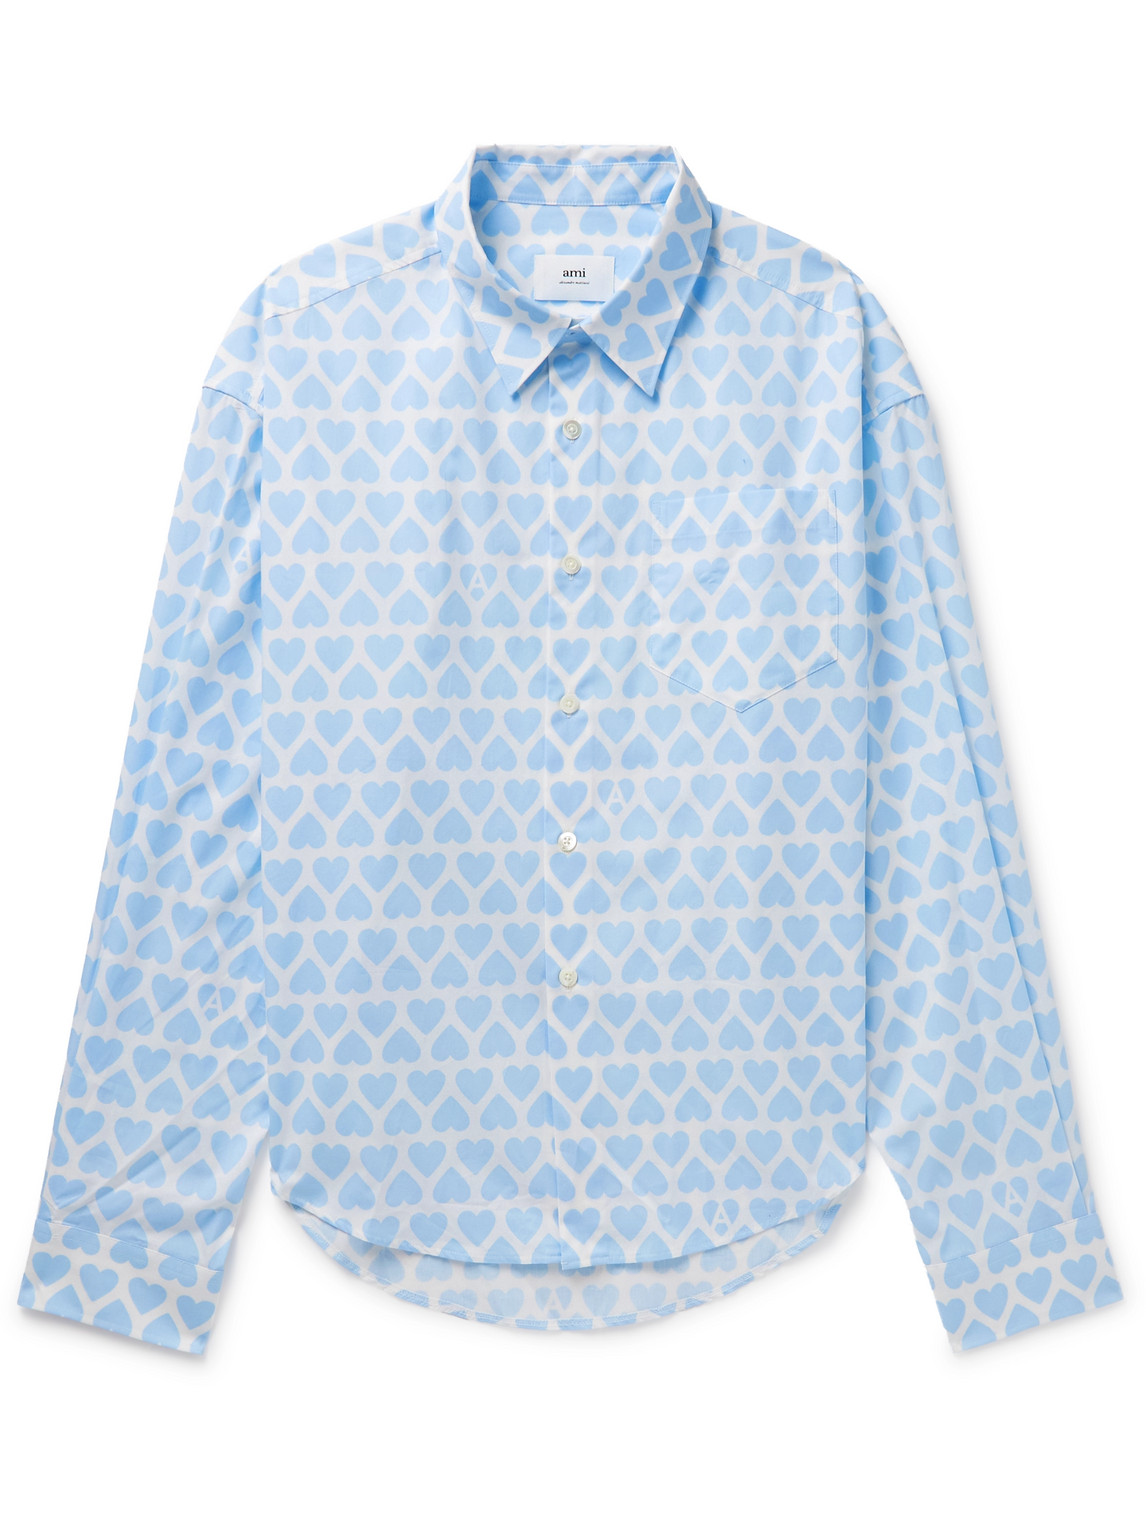 Ami Alexandre Mattiussi Printed Cotton-voile Shirt In Blue